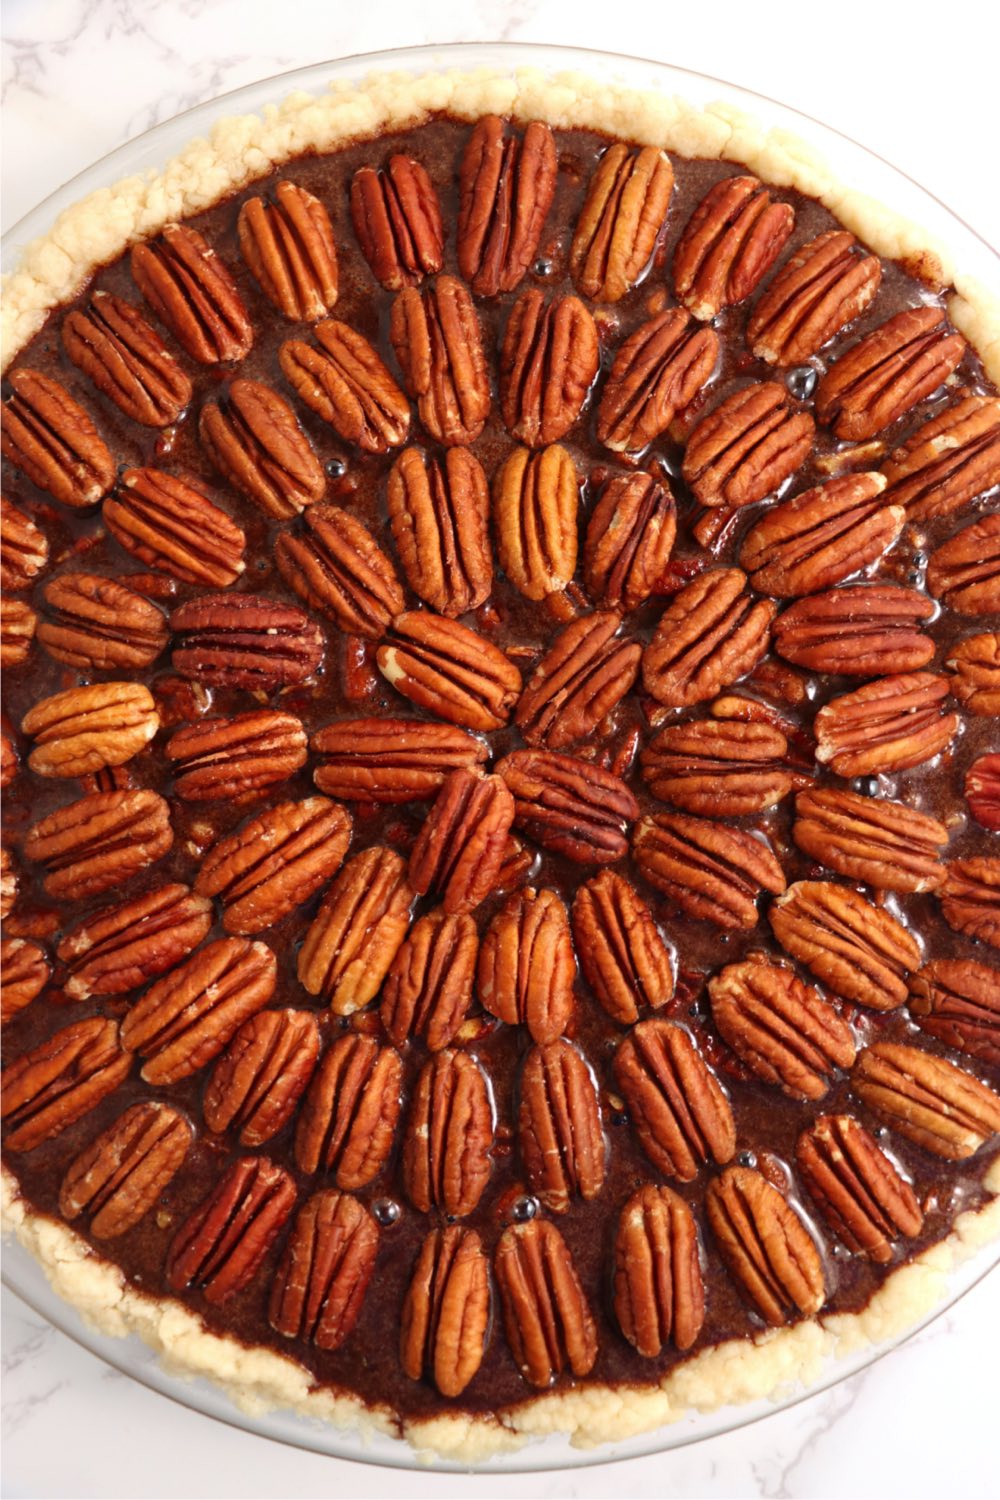 Decorative arrangement of pecans on top of a pie